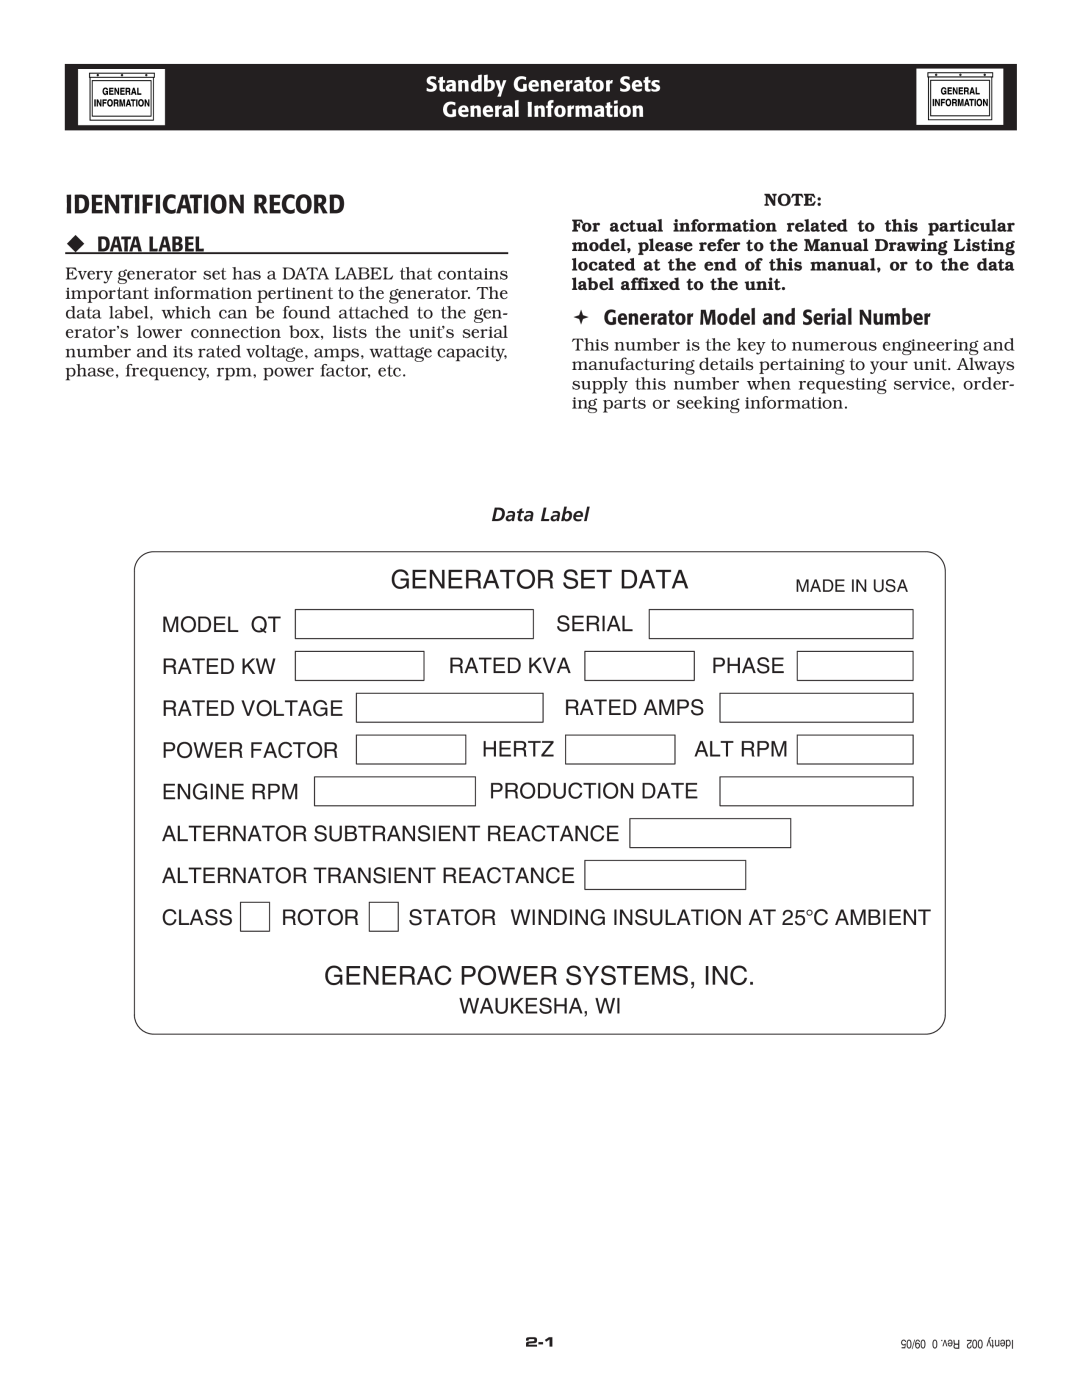 Generac 20kW Identification Record, Standby Generator Sets General Information, ‹Data Label, Generator Set Data 